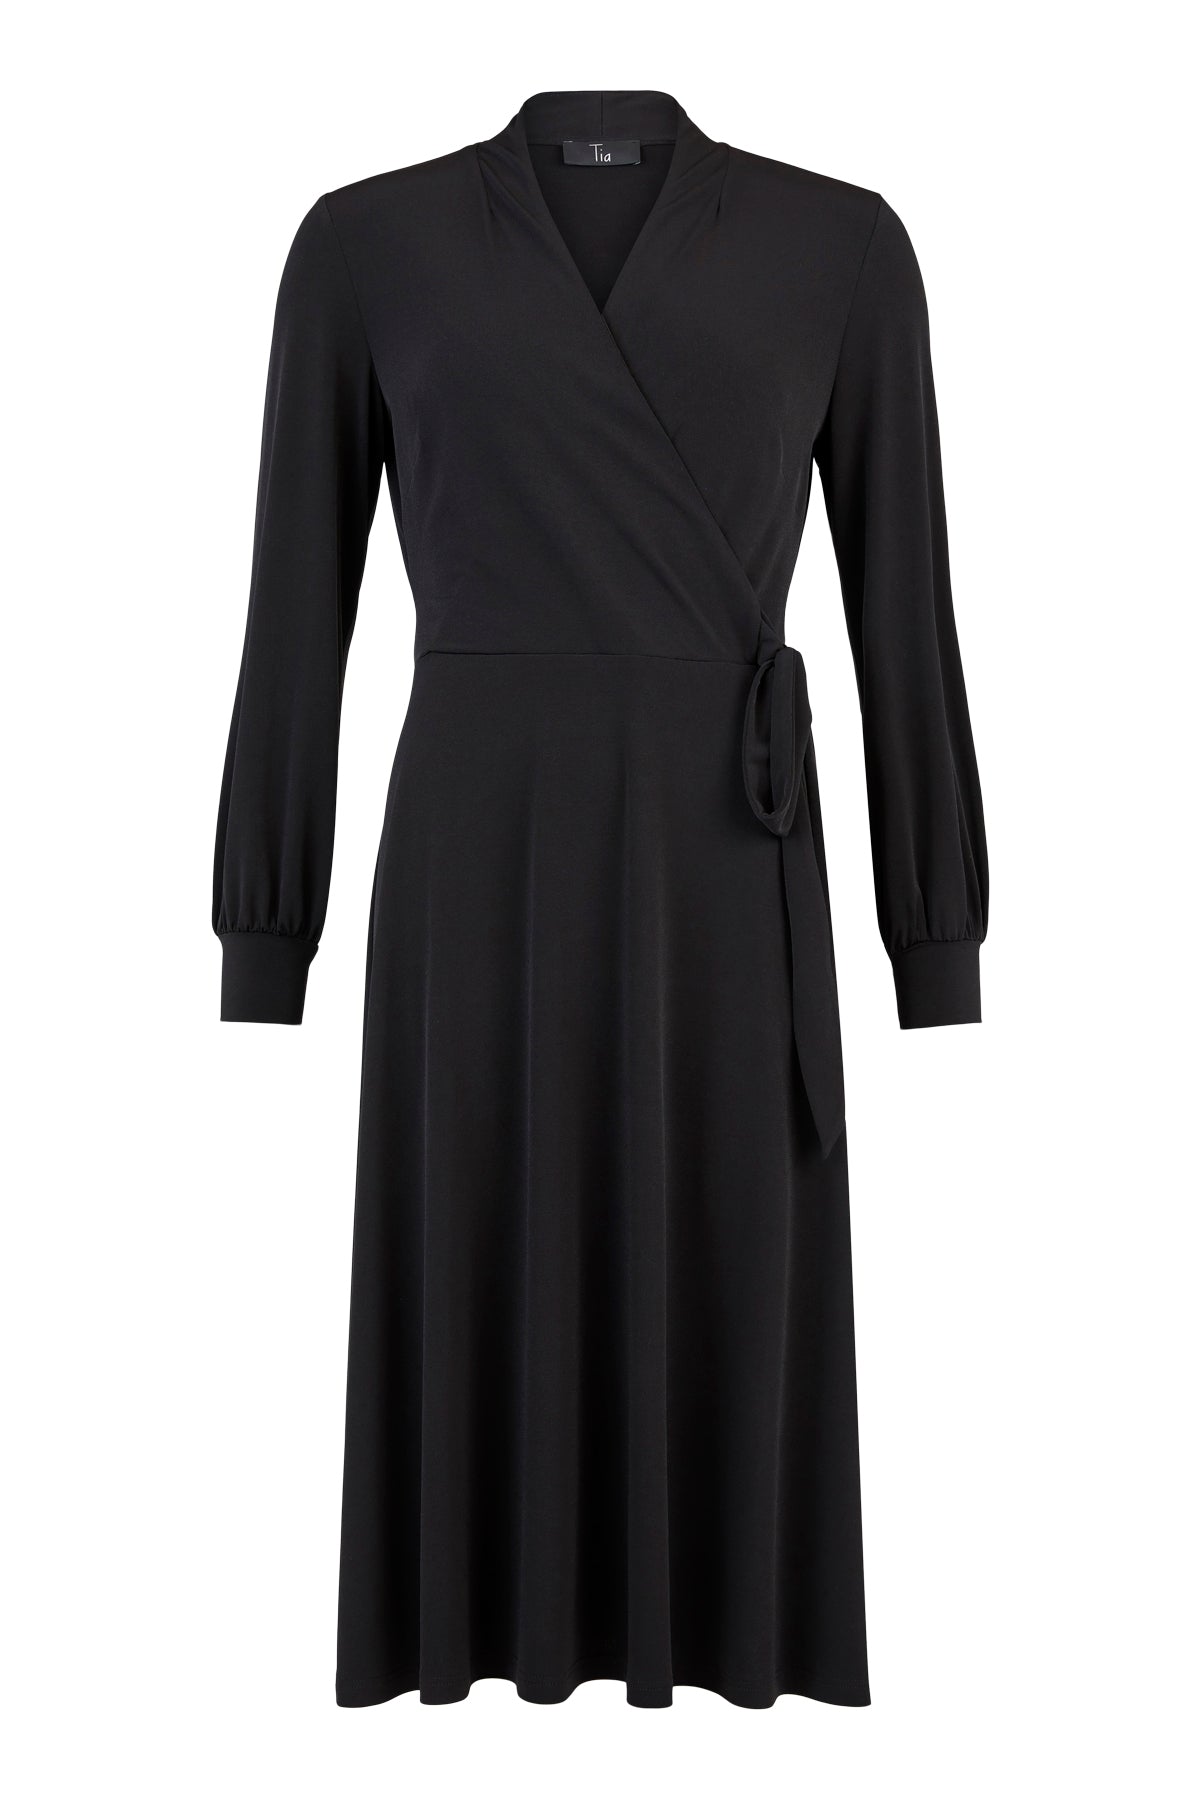 Tia 78426 Black Long Sleeved Wrap Dress